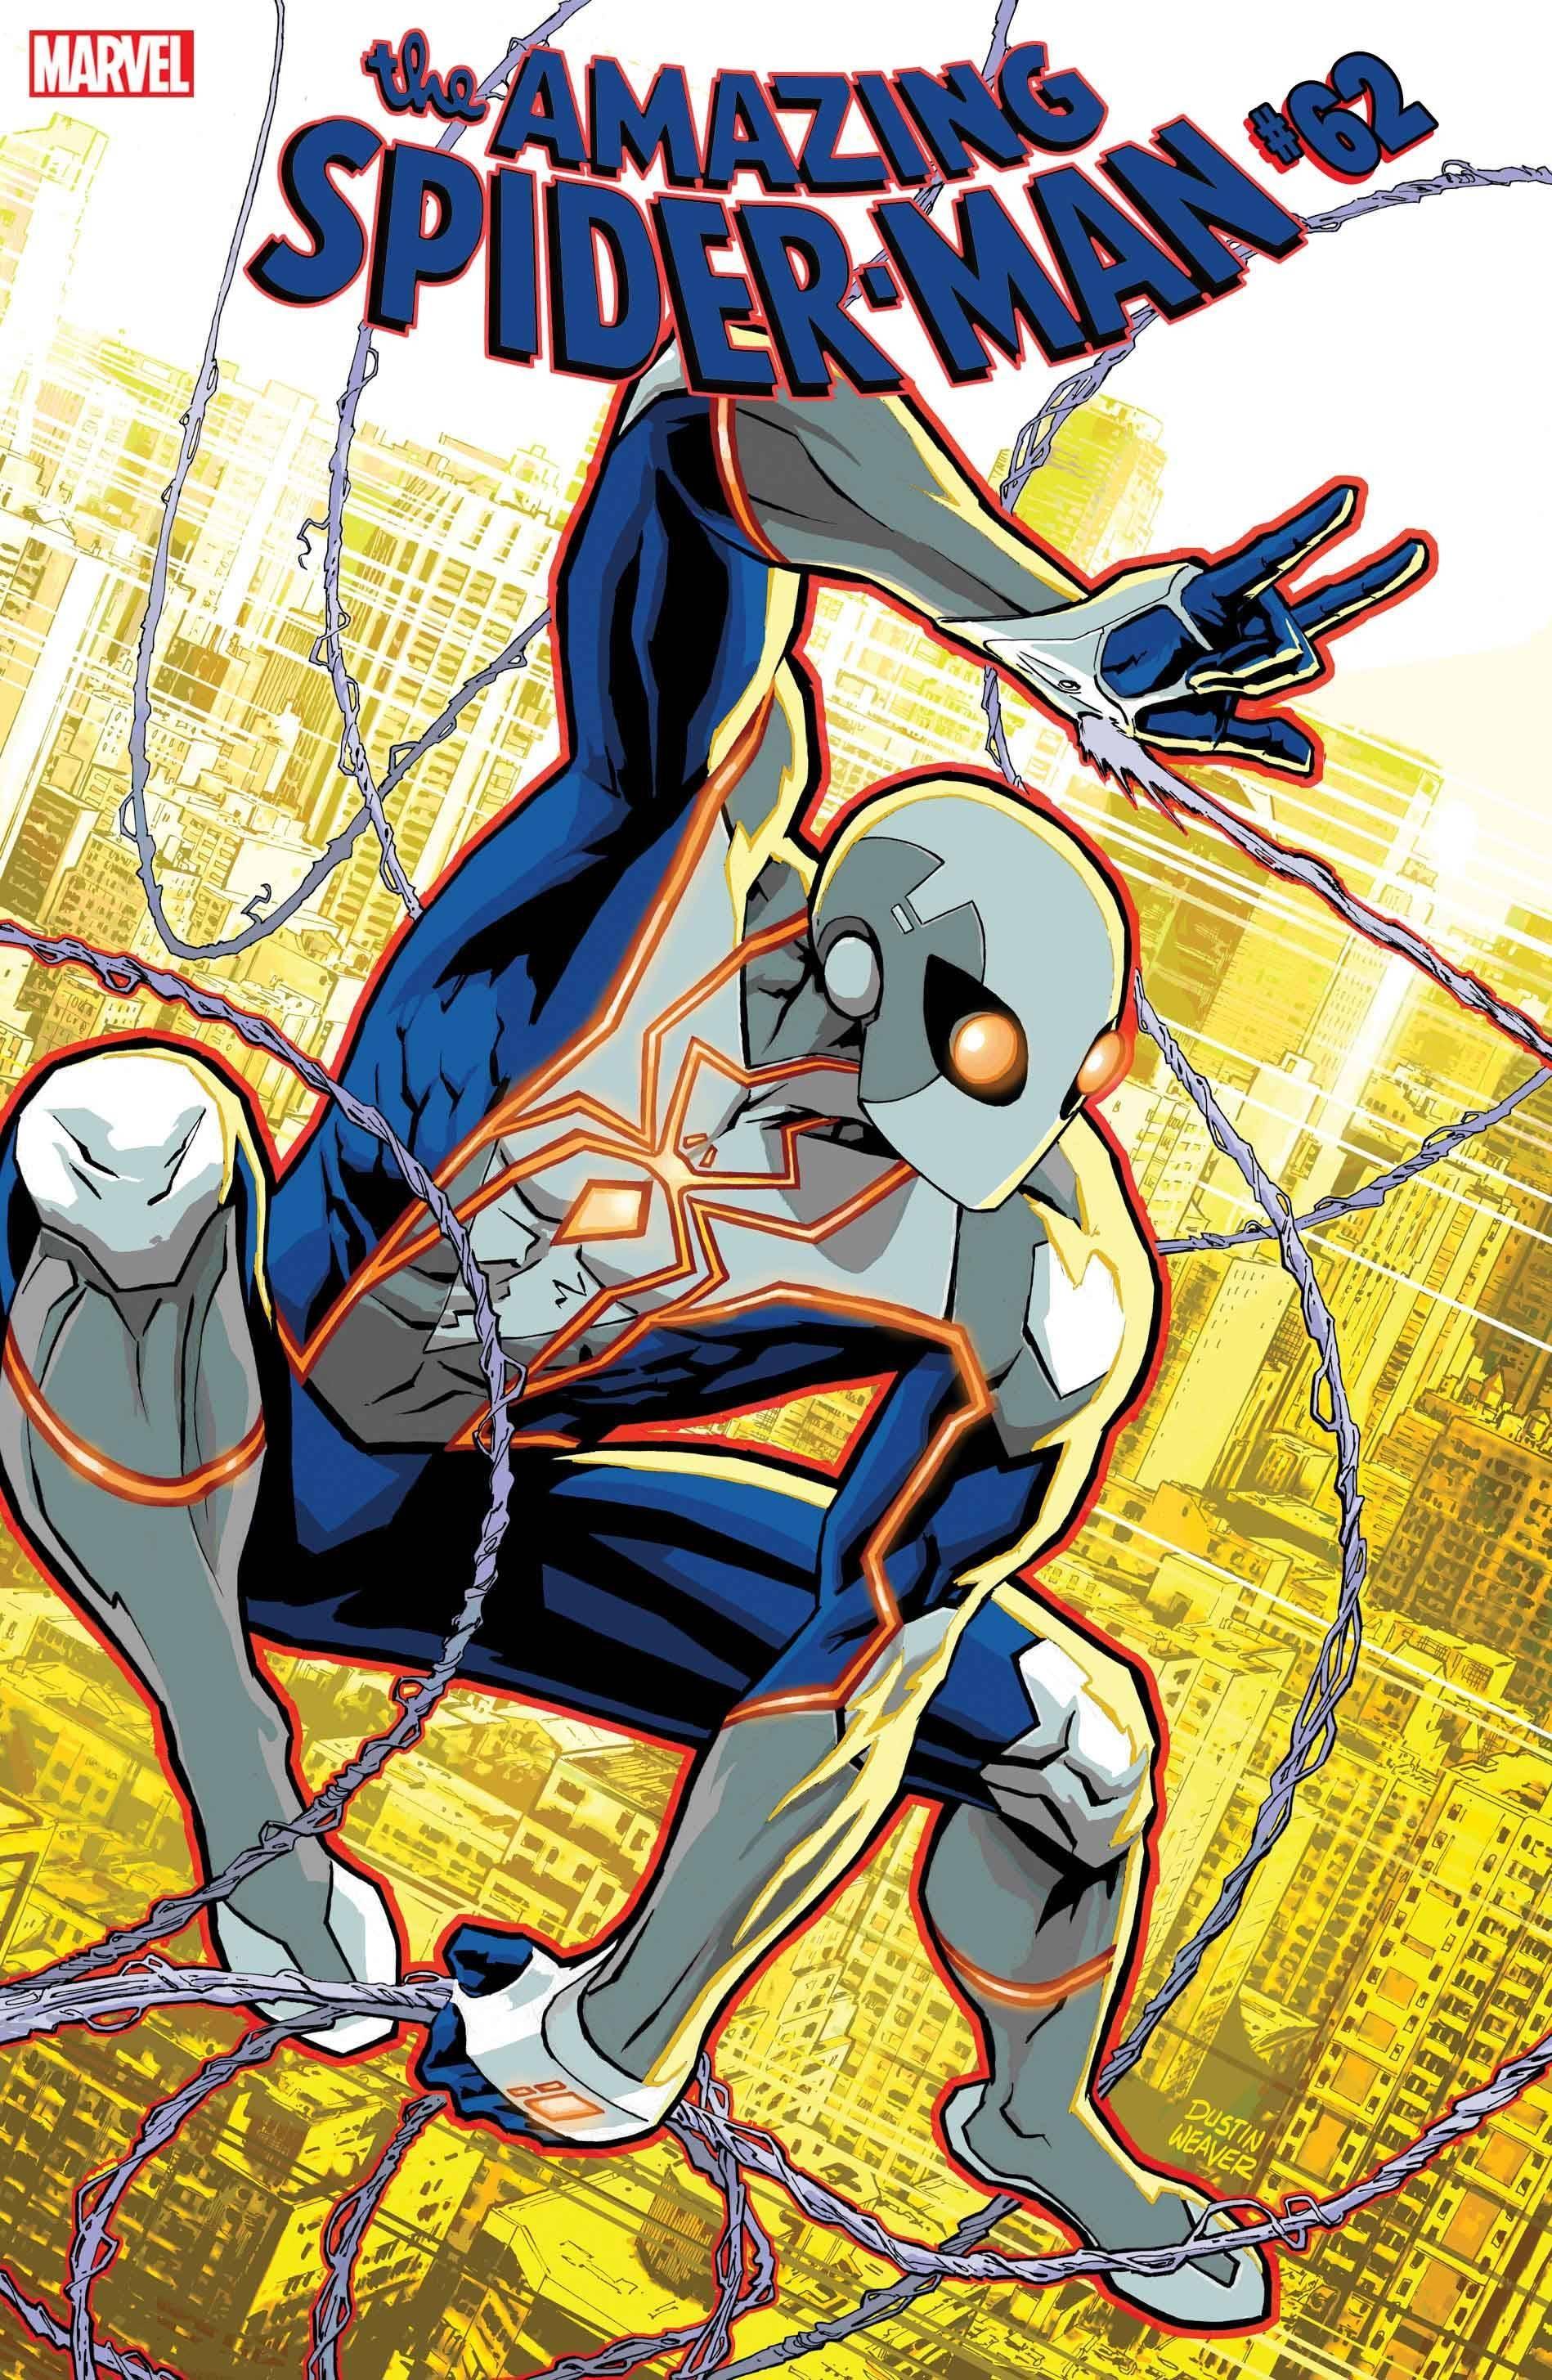 AMAZING SPIDER-MAN VOL 5 (2018) #62 10 COPY INCV WEAVER DESIGN VAR - Kings Comics